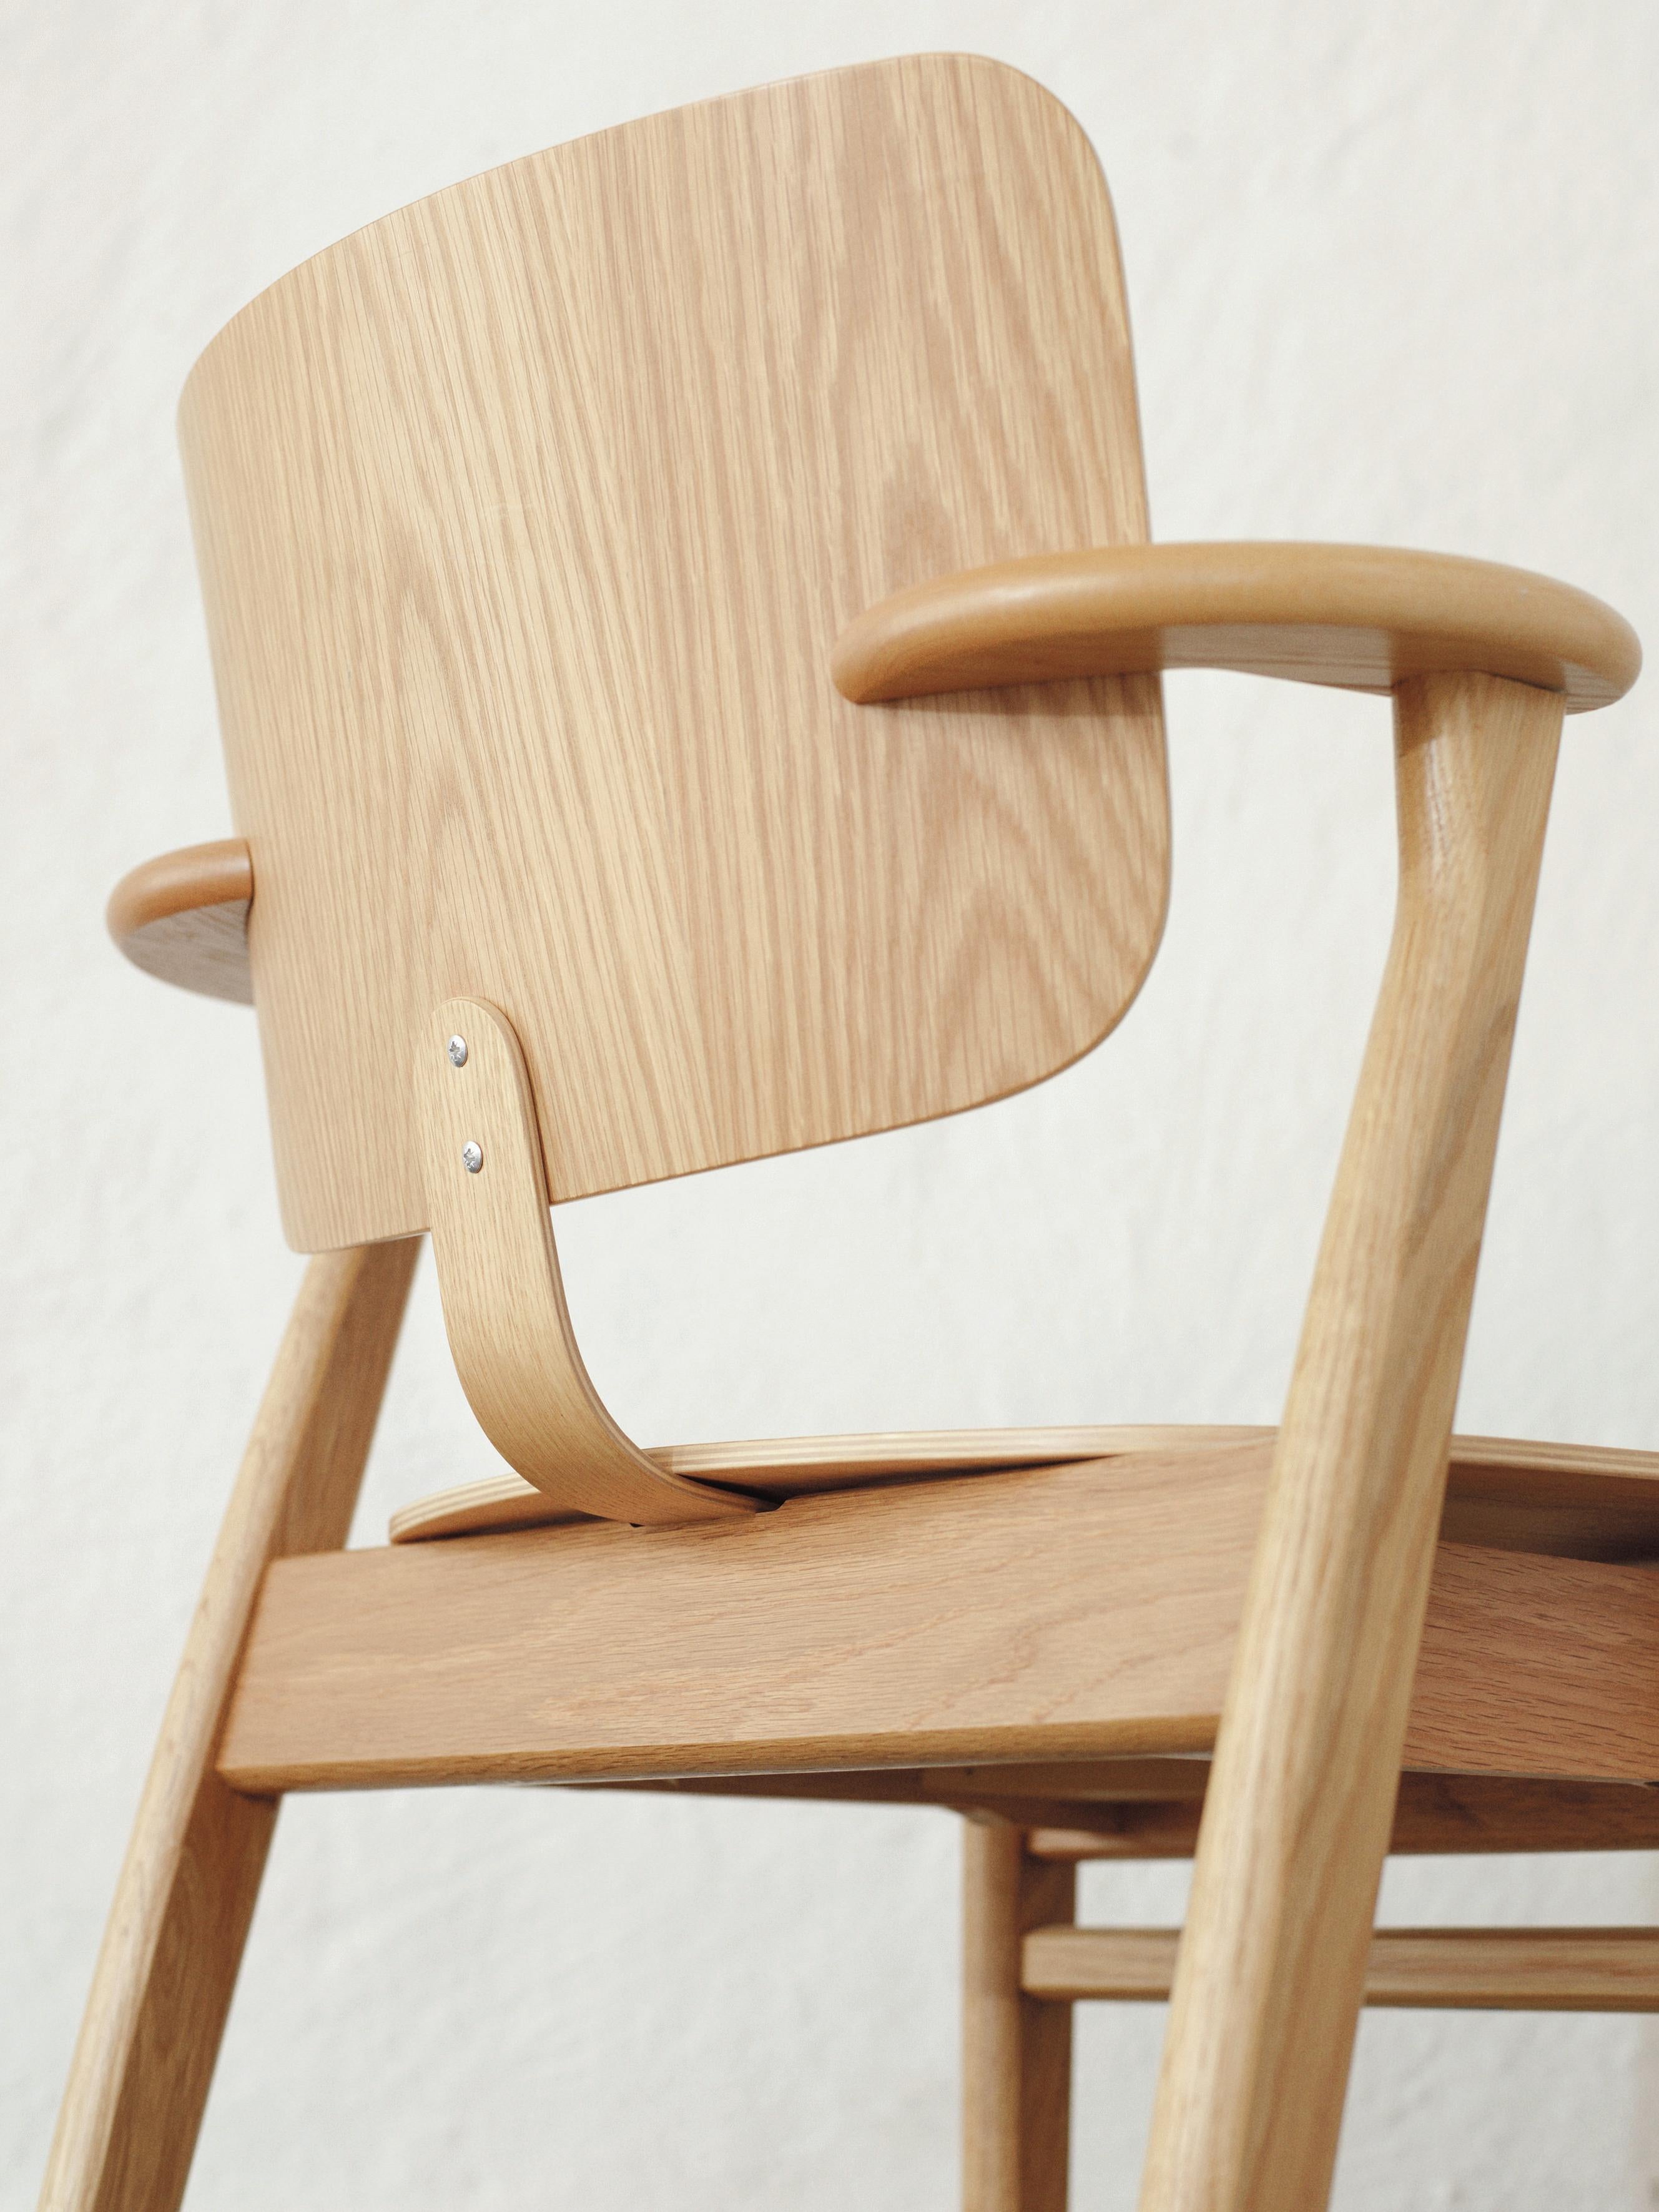 Finnish Ilmari Tapiovaara Domus Chair in White Lacquered Birch for Artek